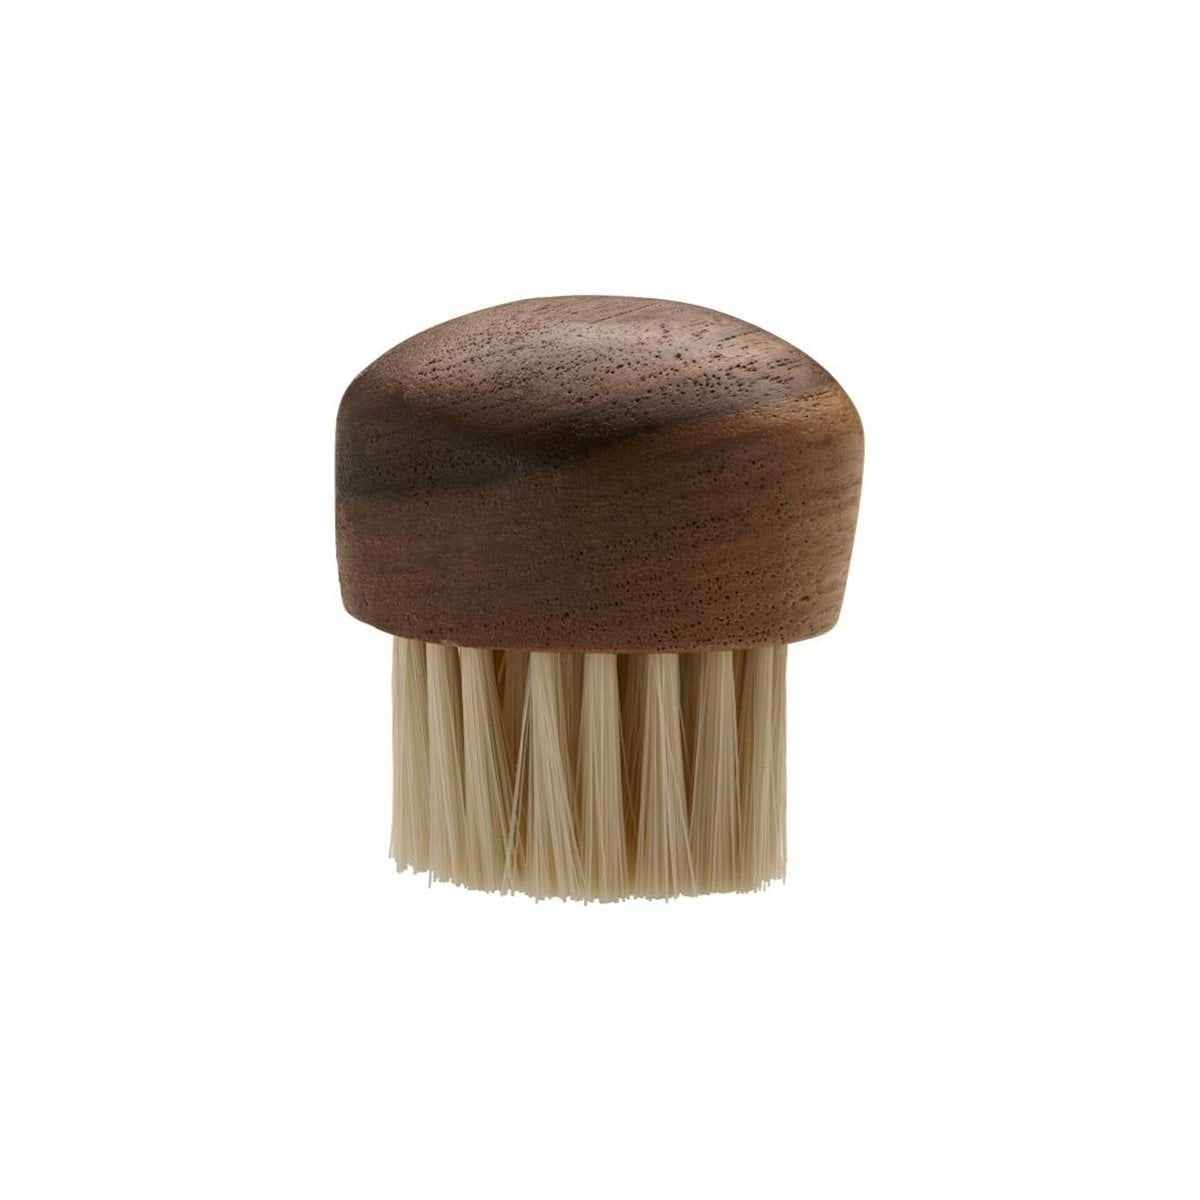 Roesle Mushroom Brush - Diameter 4 cm